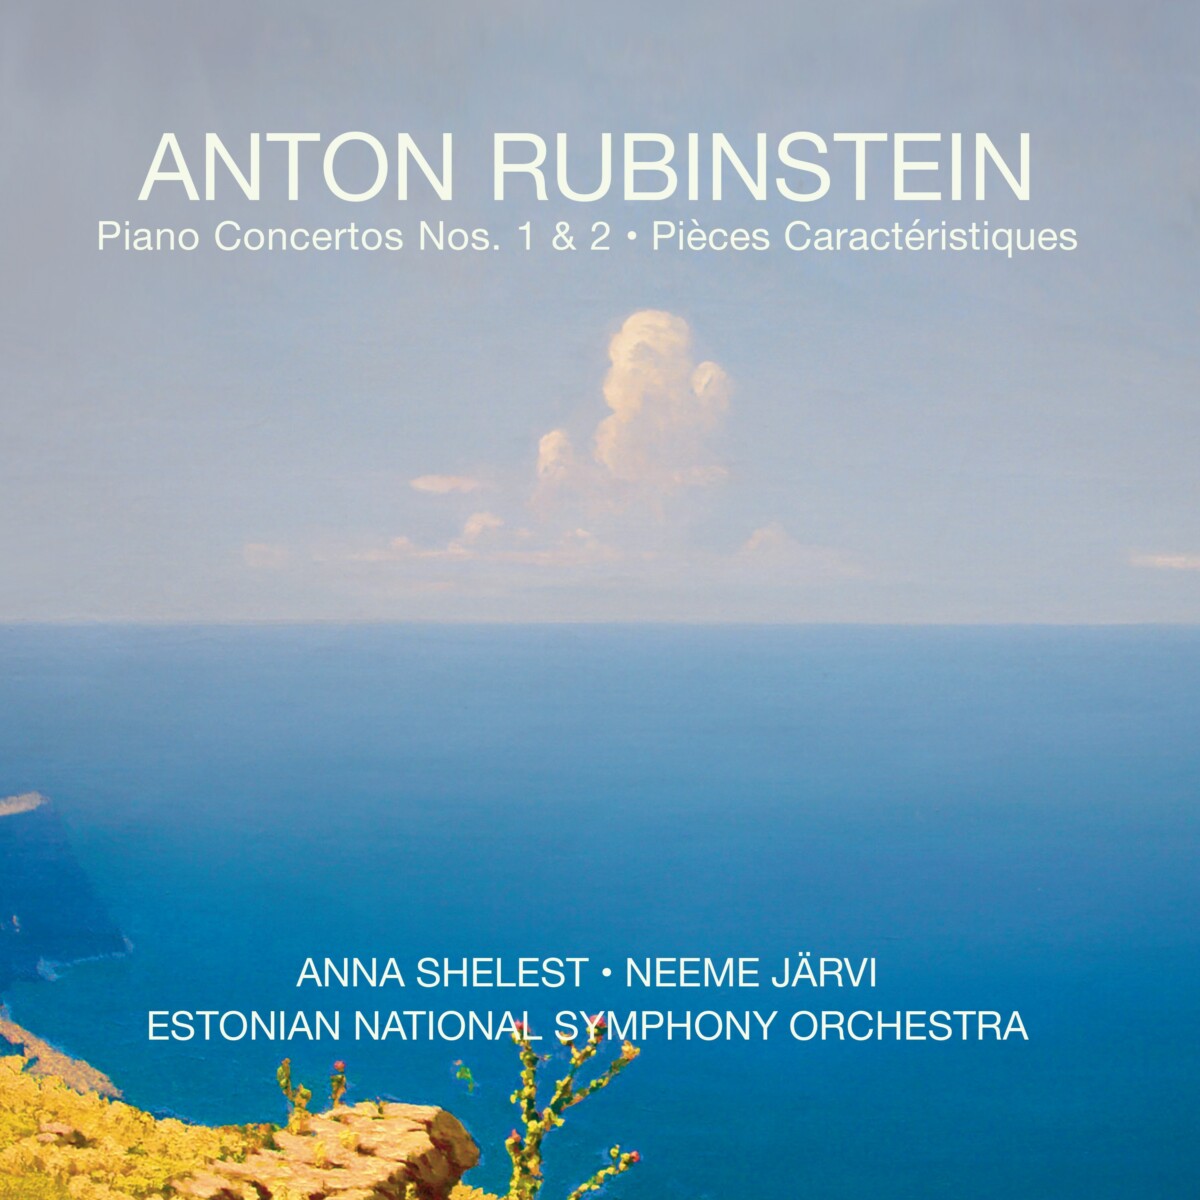 Anton Rubinstein: Piano Concertos Nos. 1 & 2, Pièces caractéristiques, Op.50. Anna Shelest, Neeme Järvi. Music and Arts Programs of America 2023